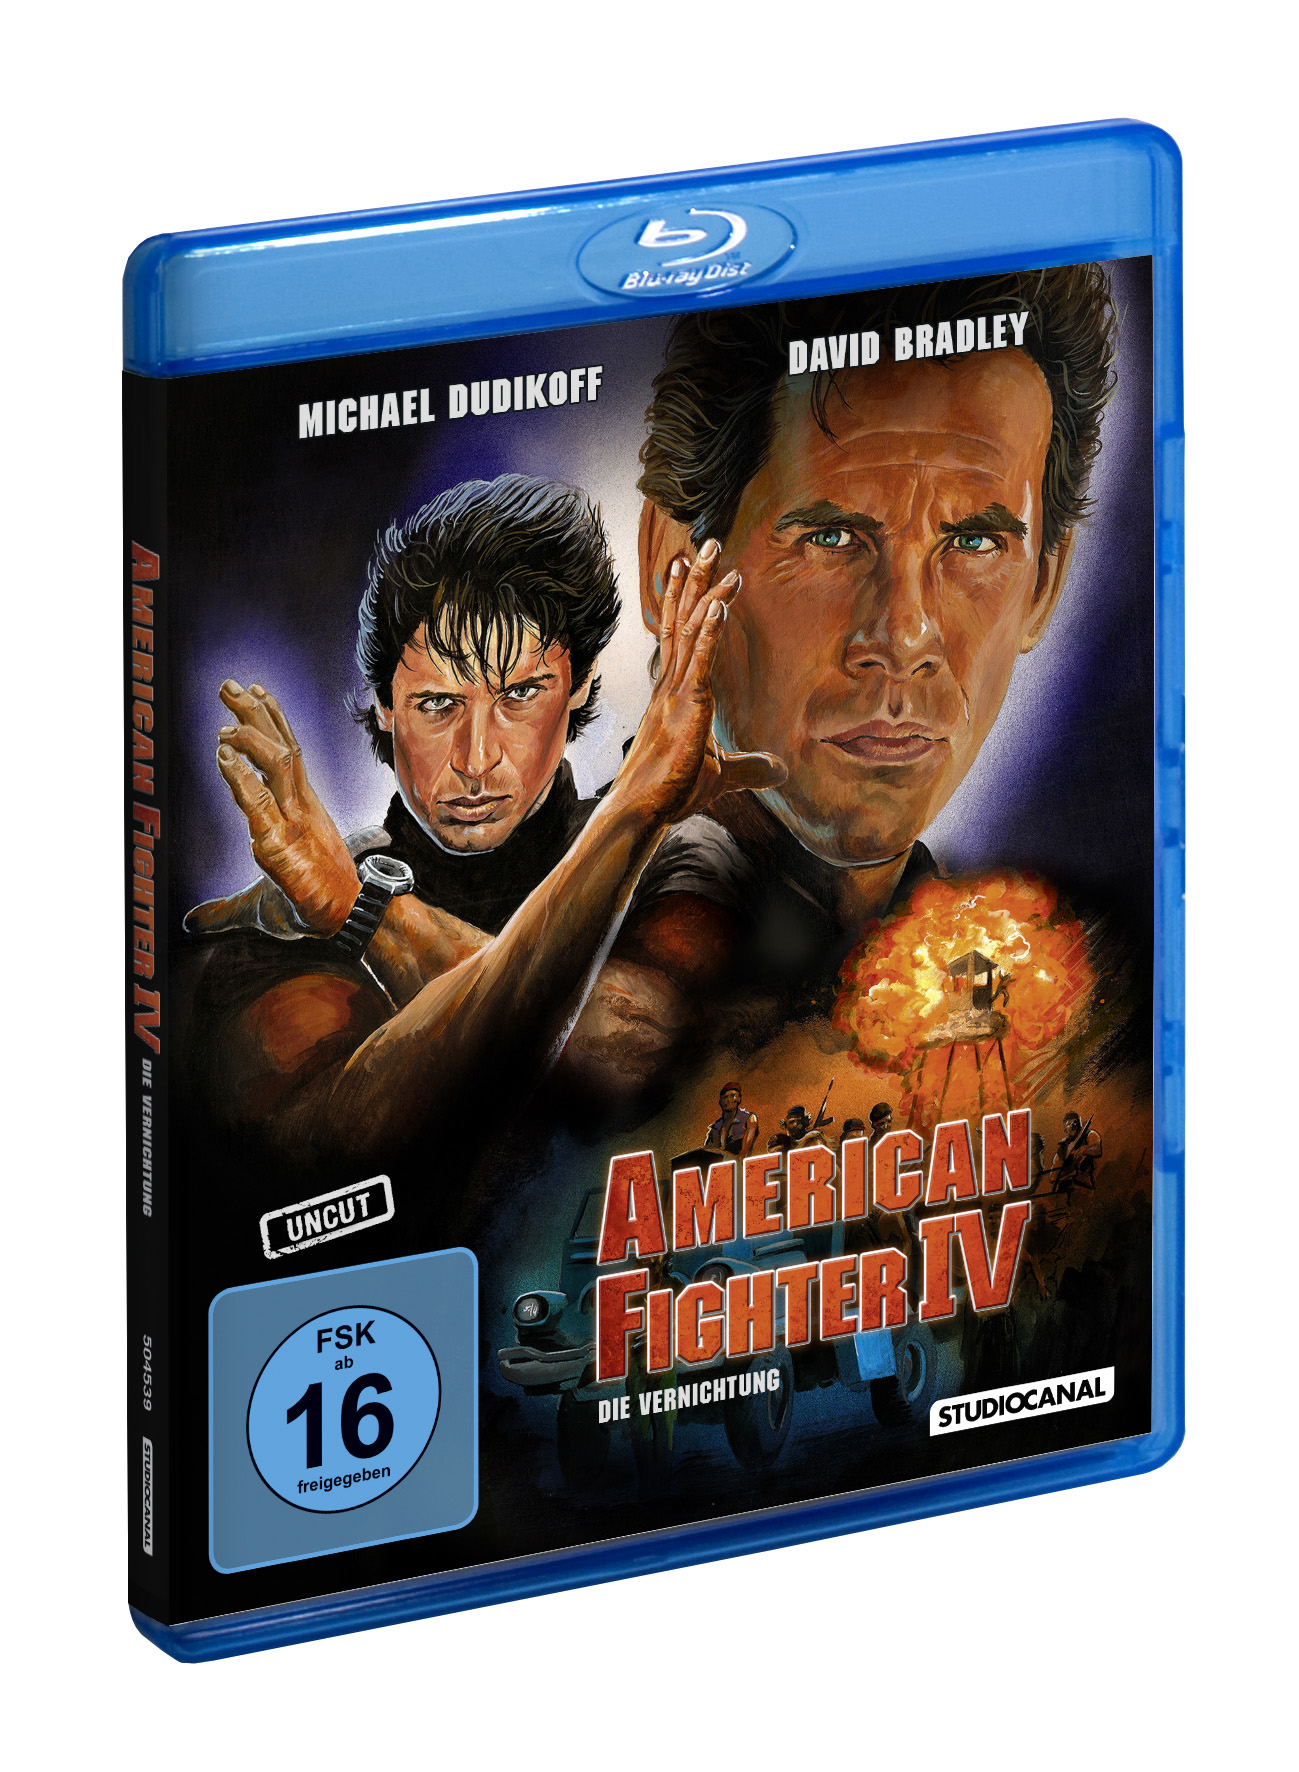 Vernichtung - Fighter American Die 4 Blu-ray